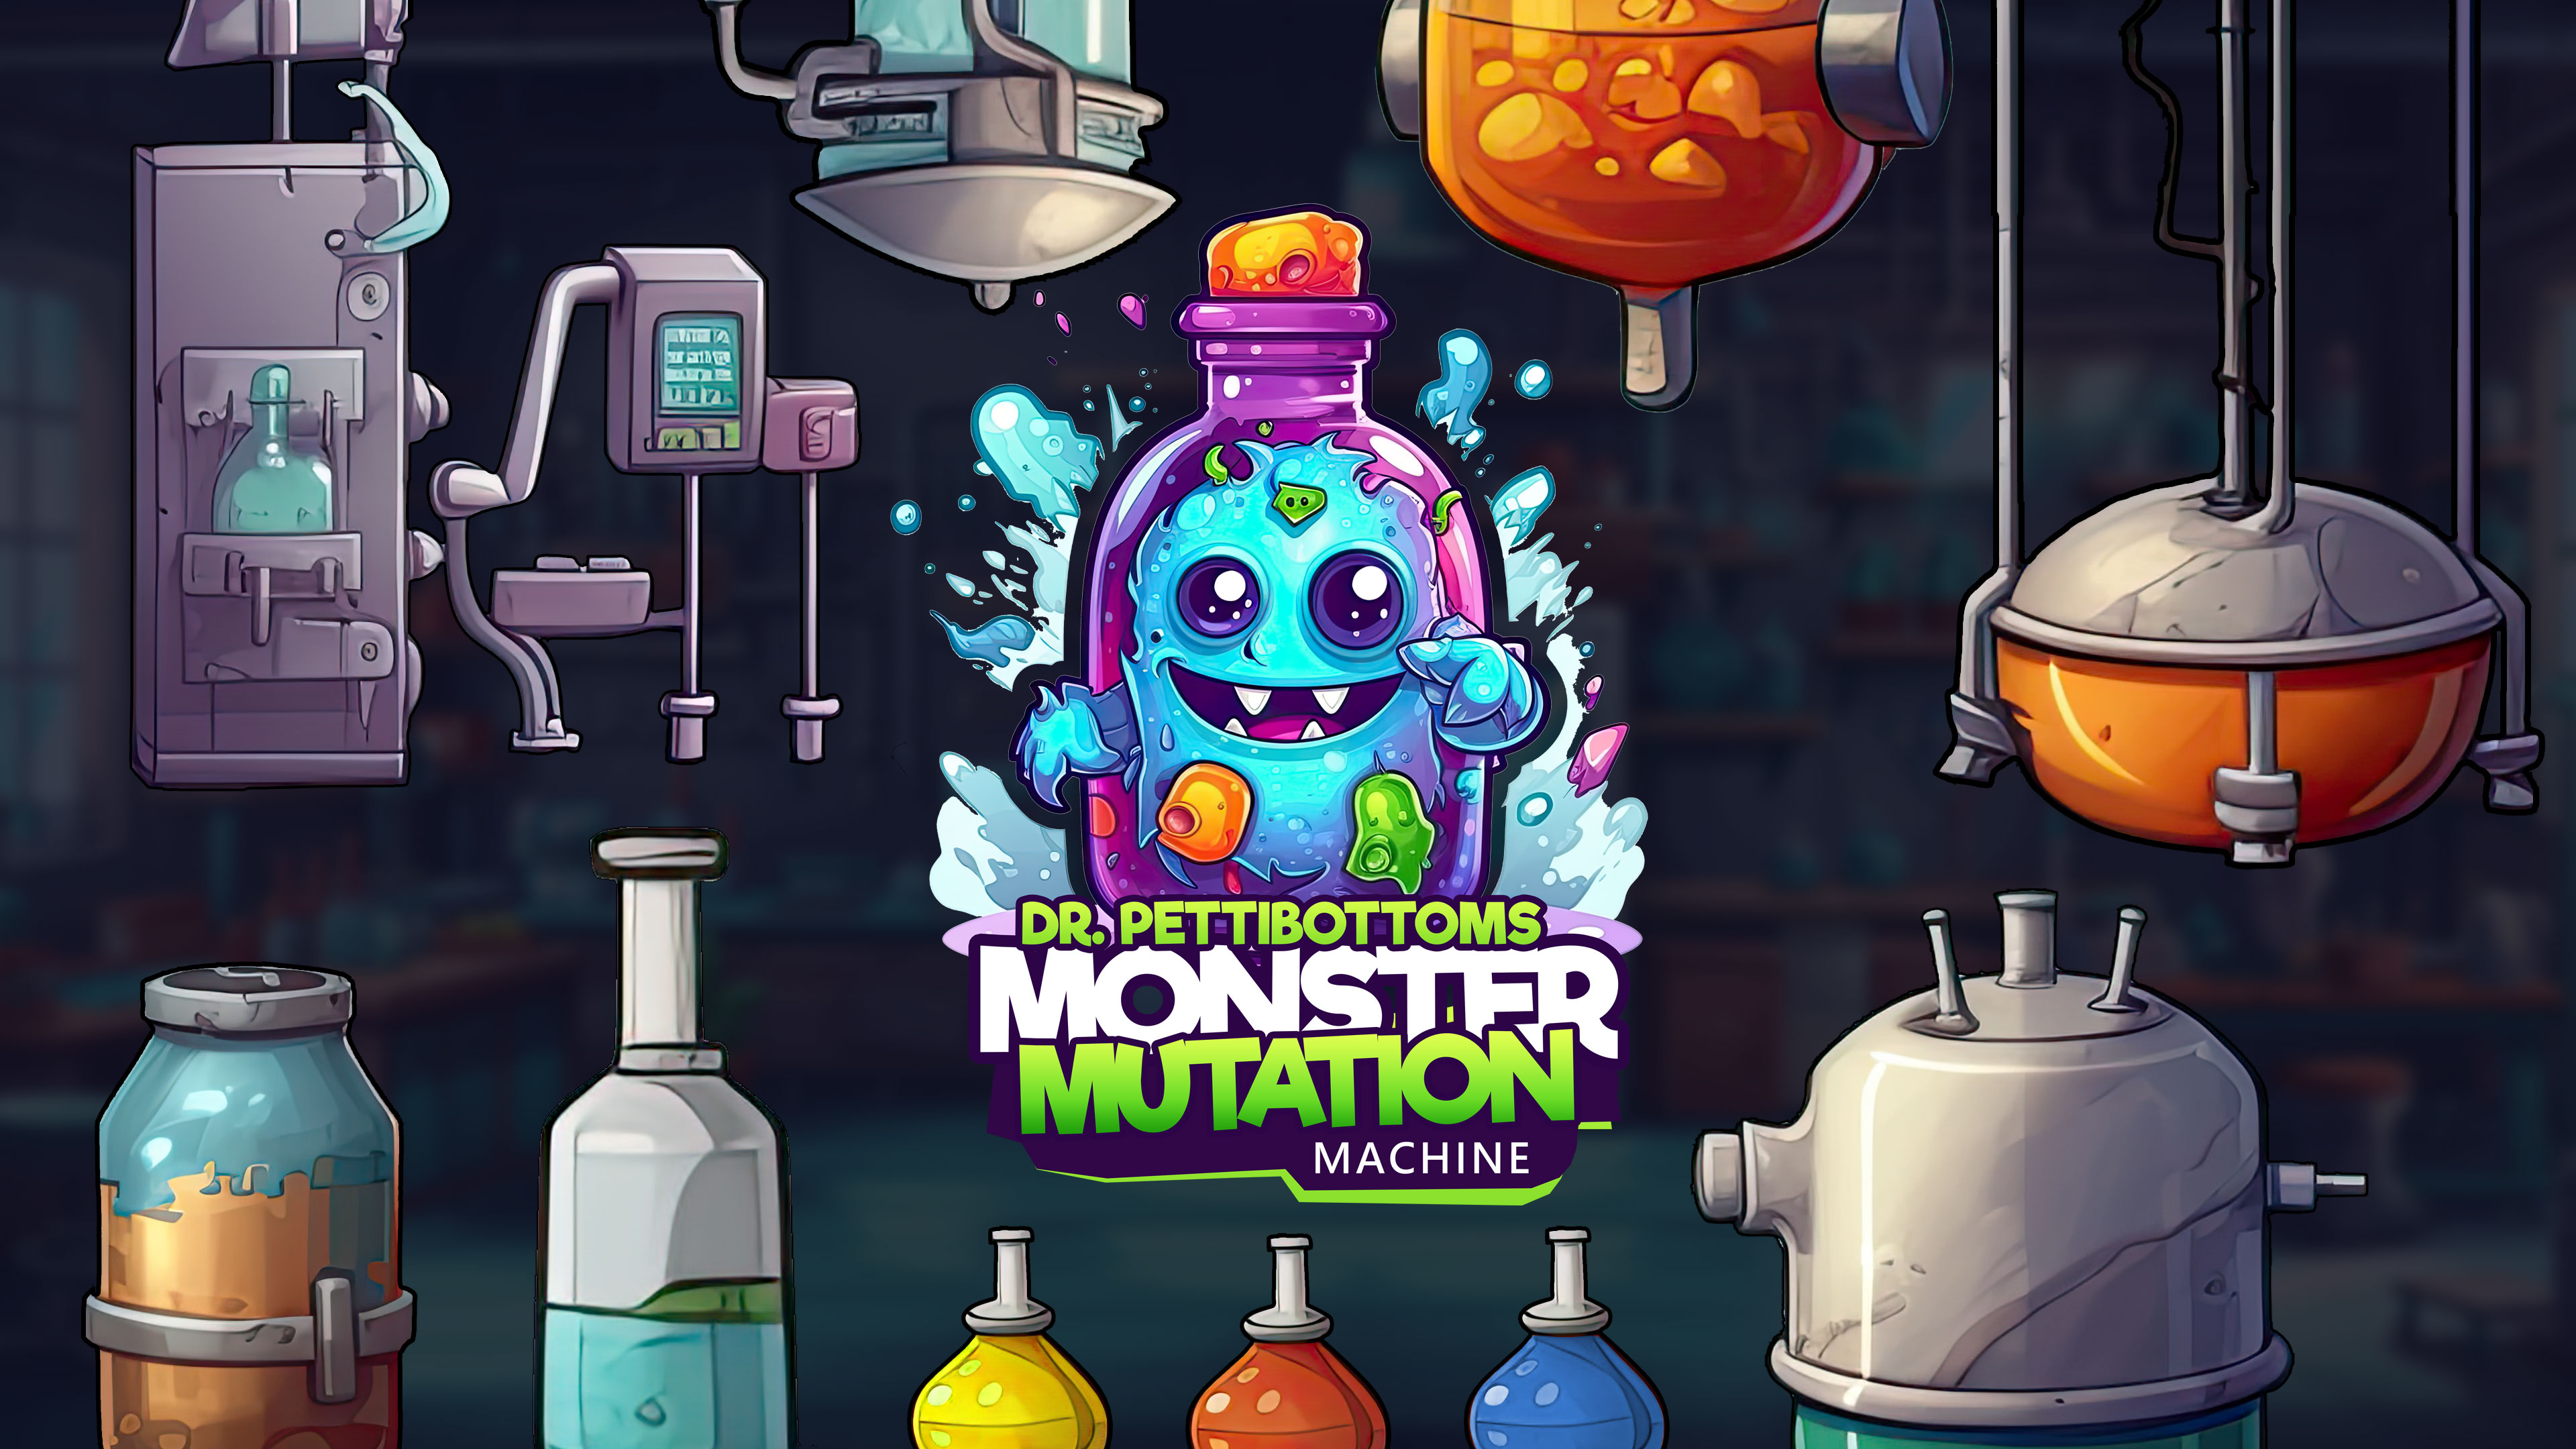 Dr. PettiBottoms Monster Mutation Machine